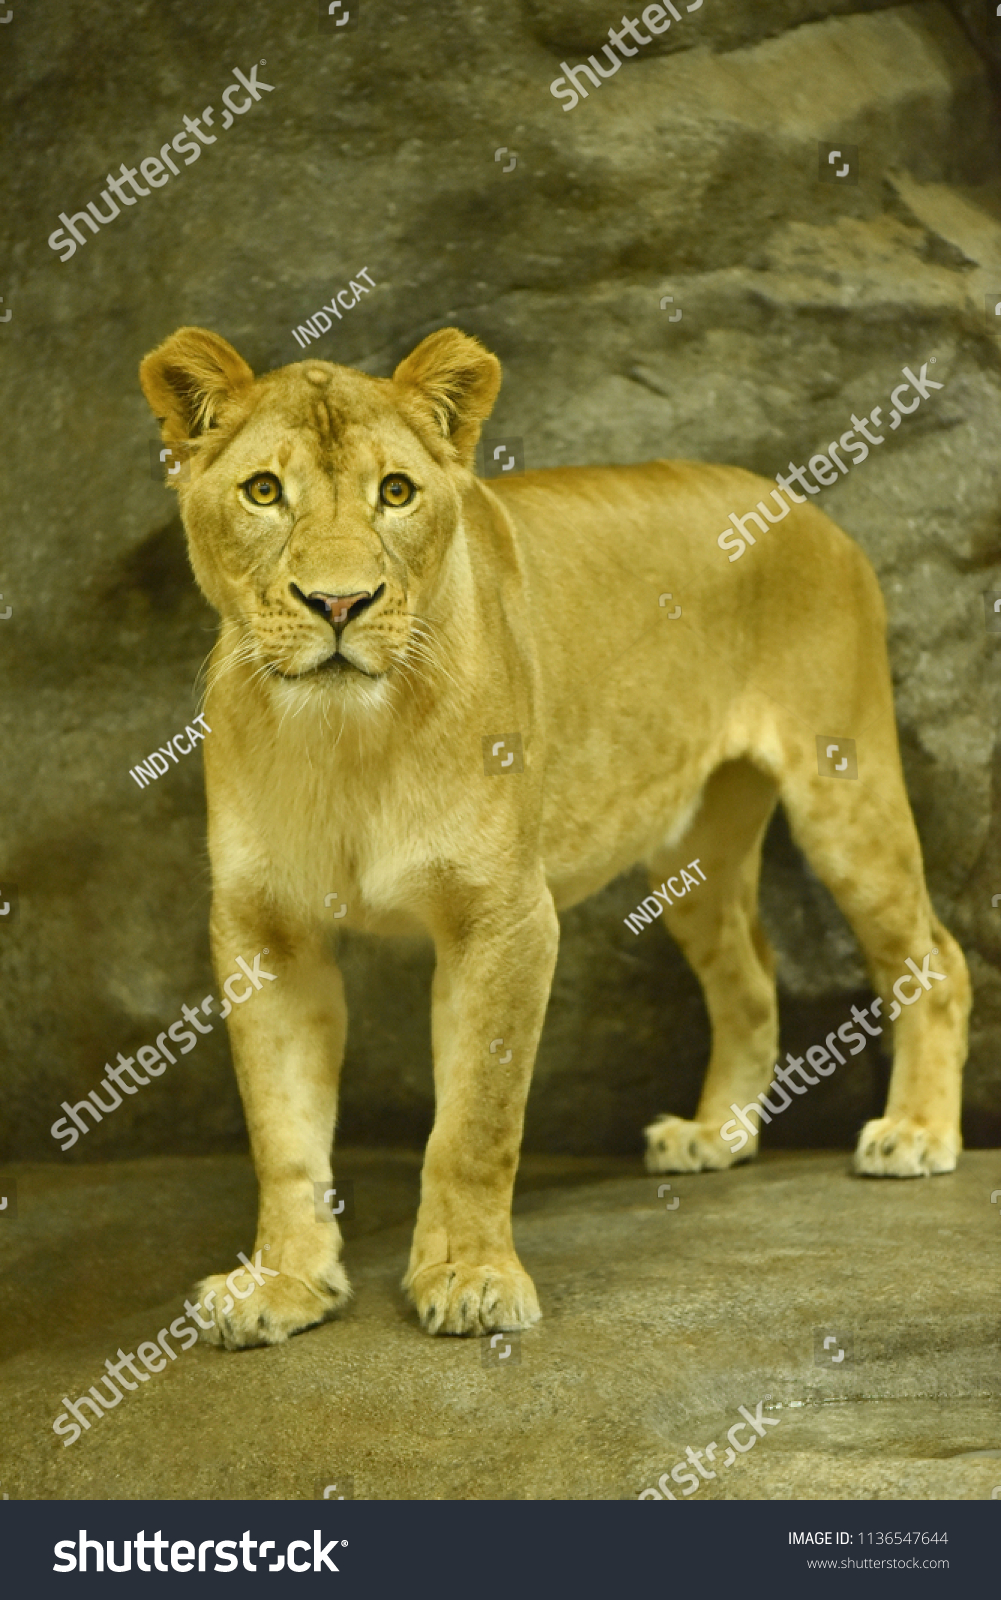 Close-up shot of roaring lion #1136547644